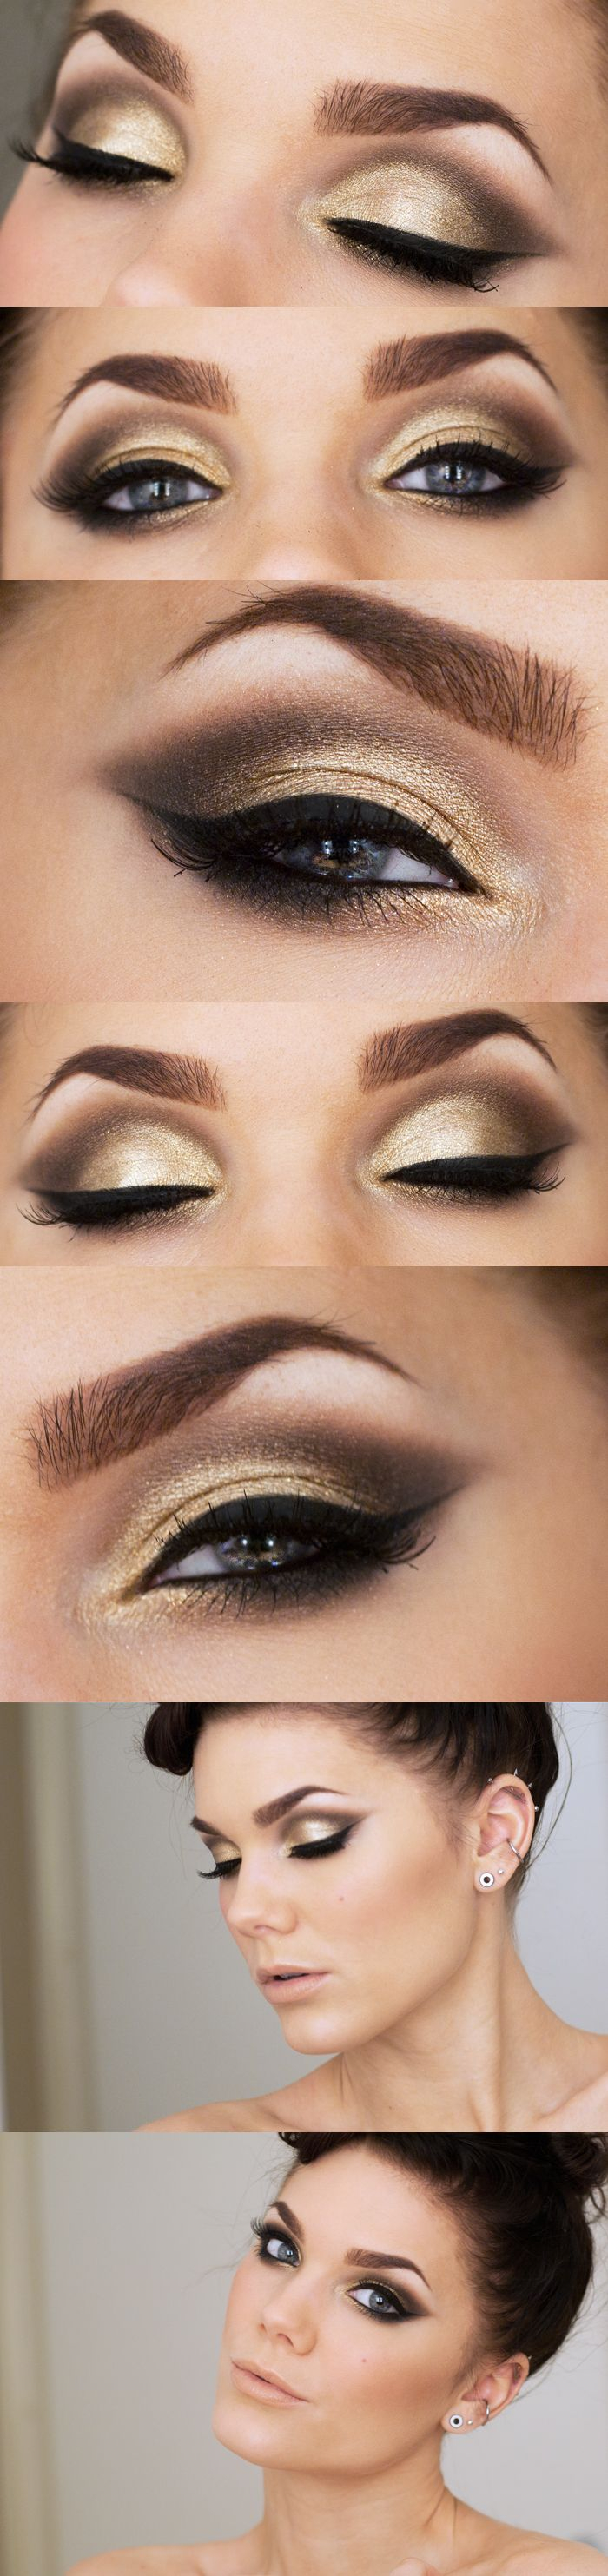 Cool Black Eye Makeup Gold And Black Smokey Eye Tutorials Best Gold And Black Eye Shadow